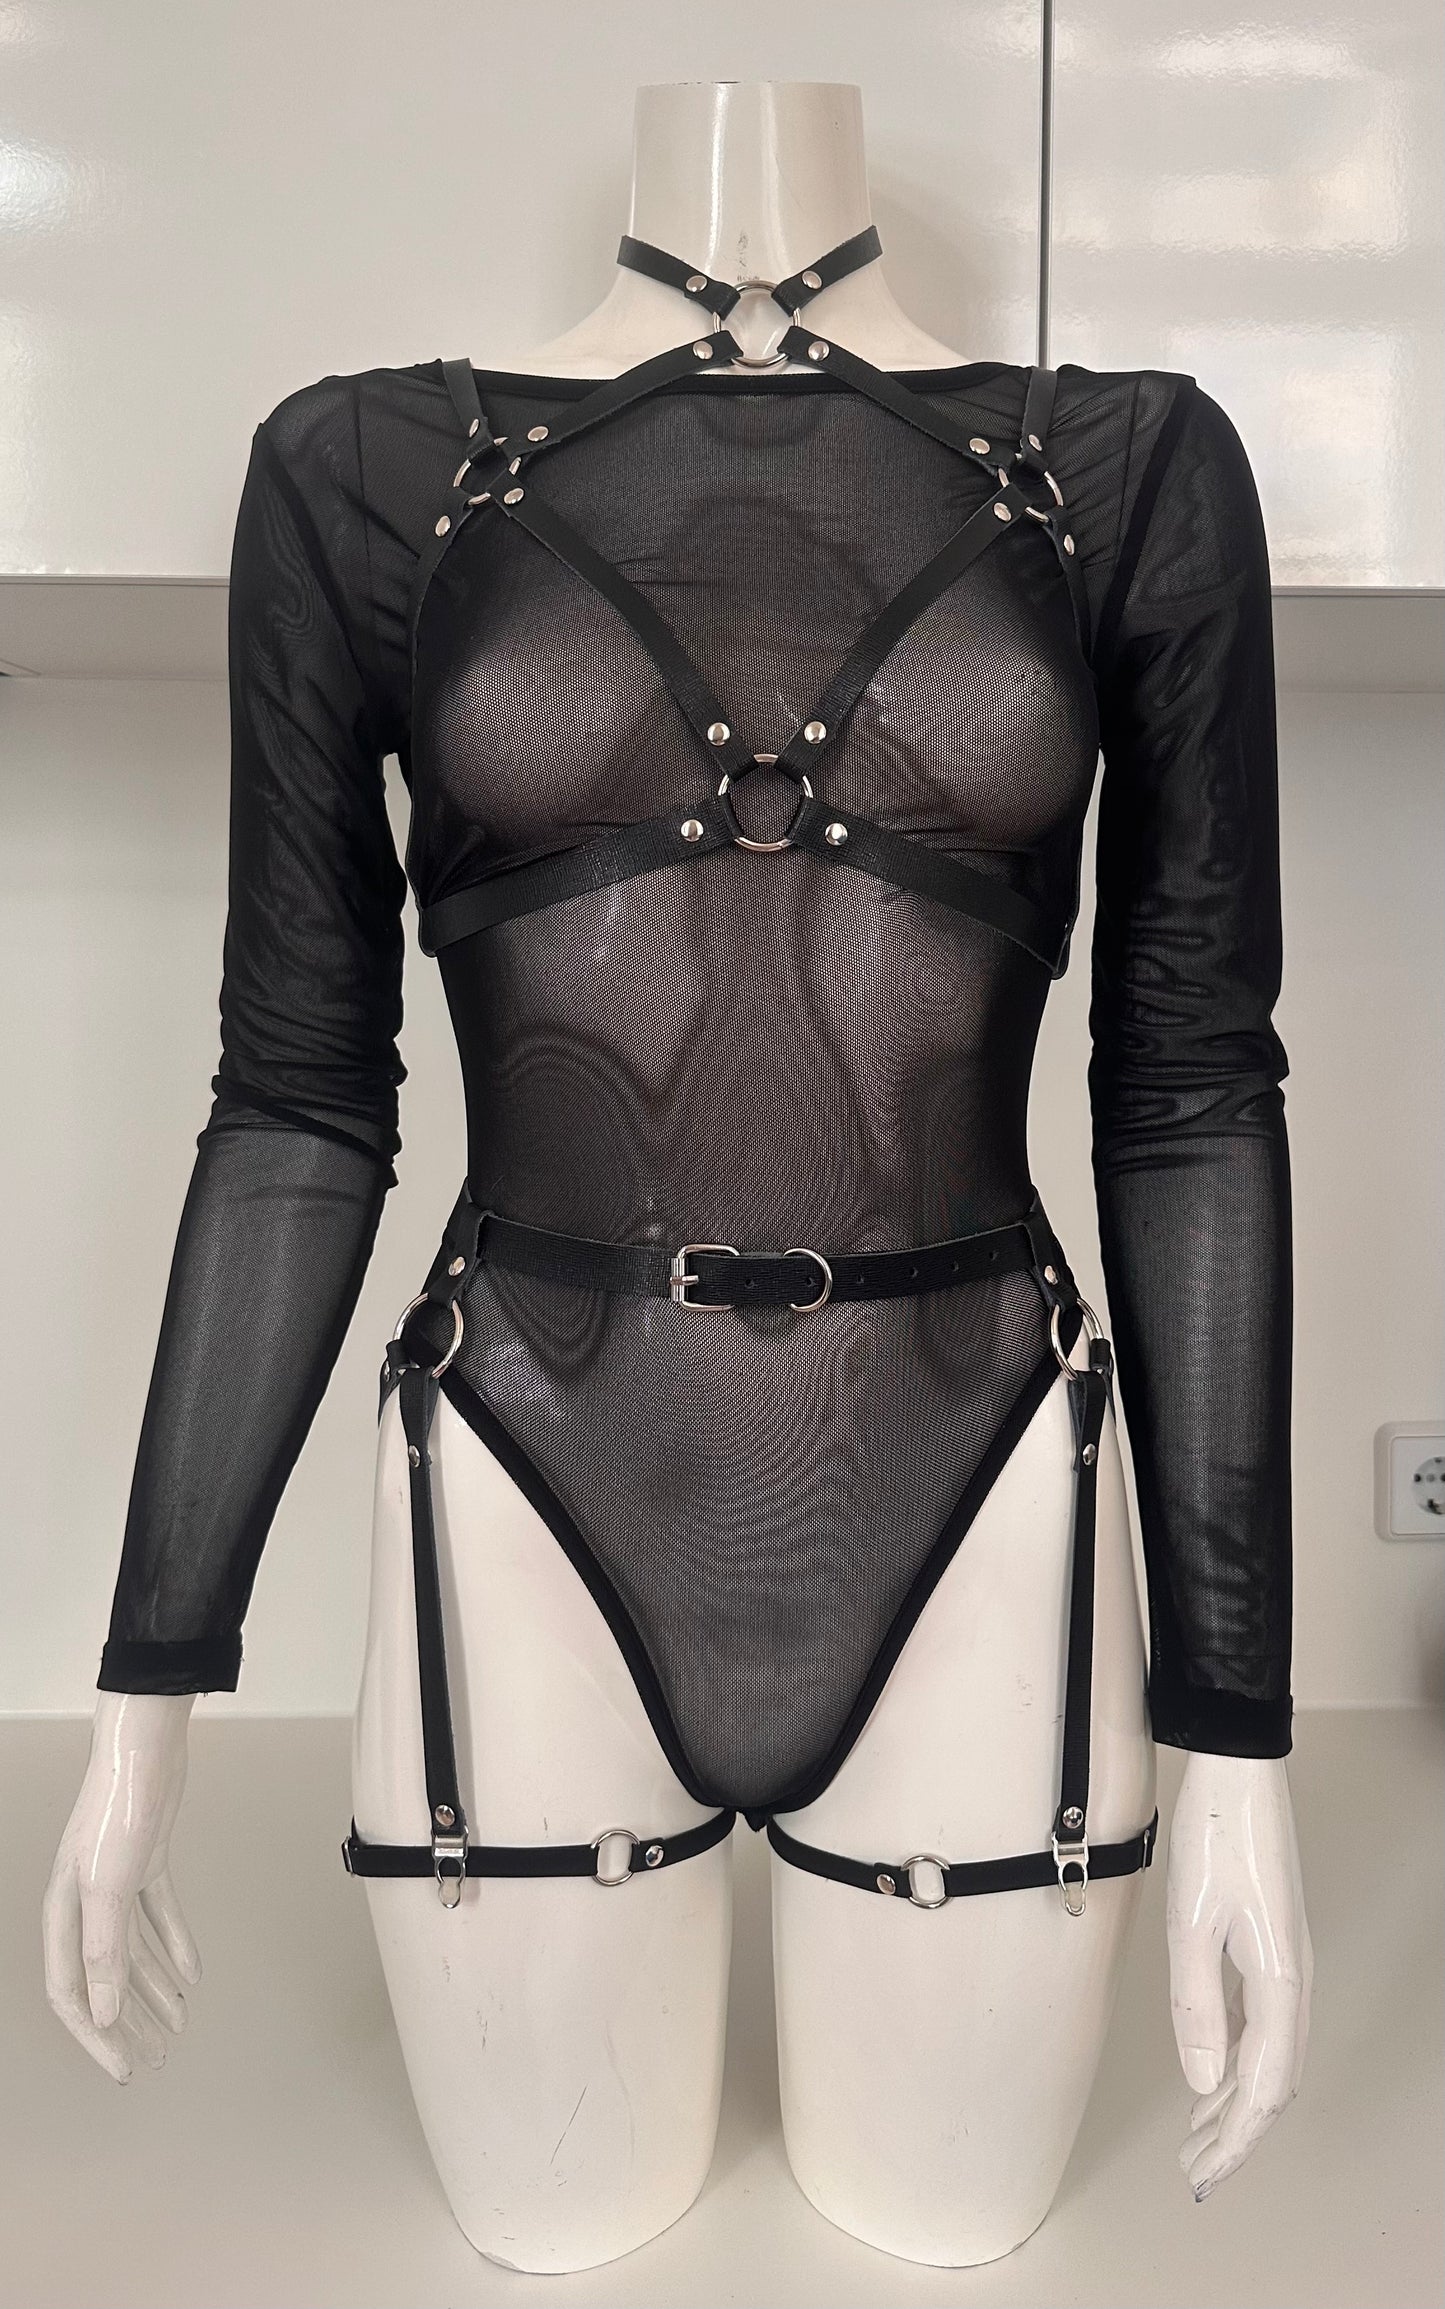 Alice Leather Harness Set of 2: bra harness and leg garter